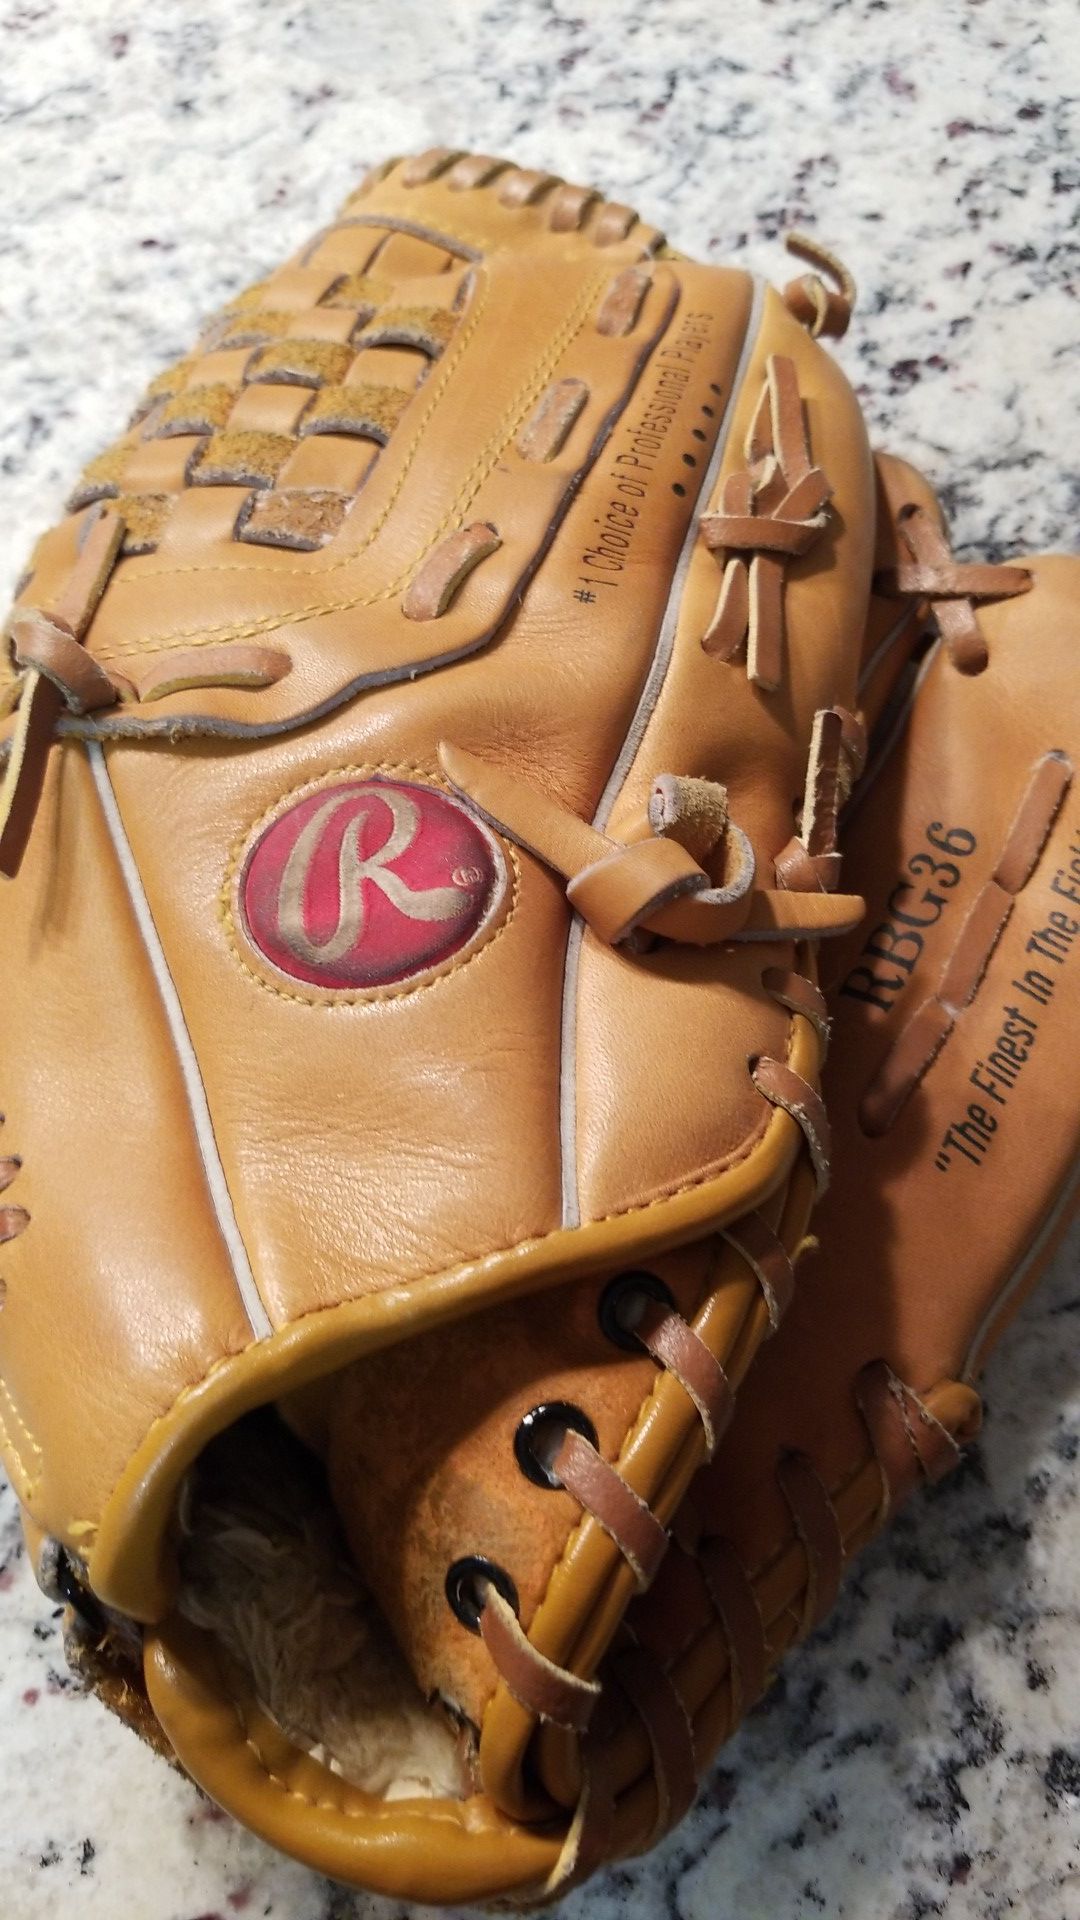 Rawlings softball glove